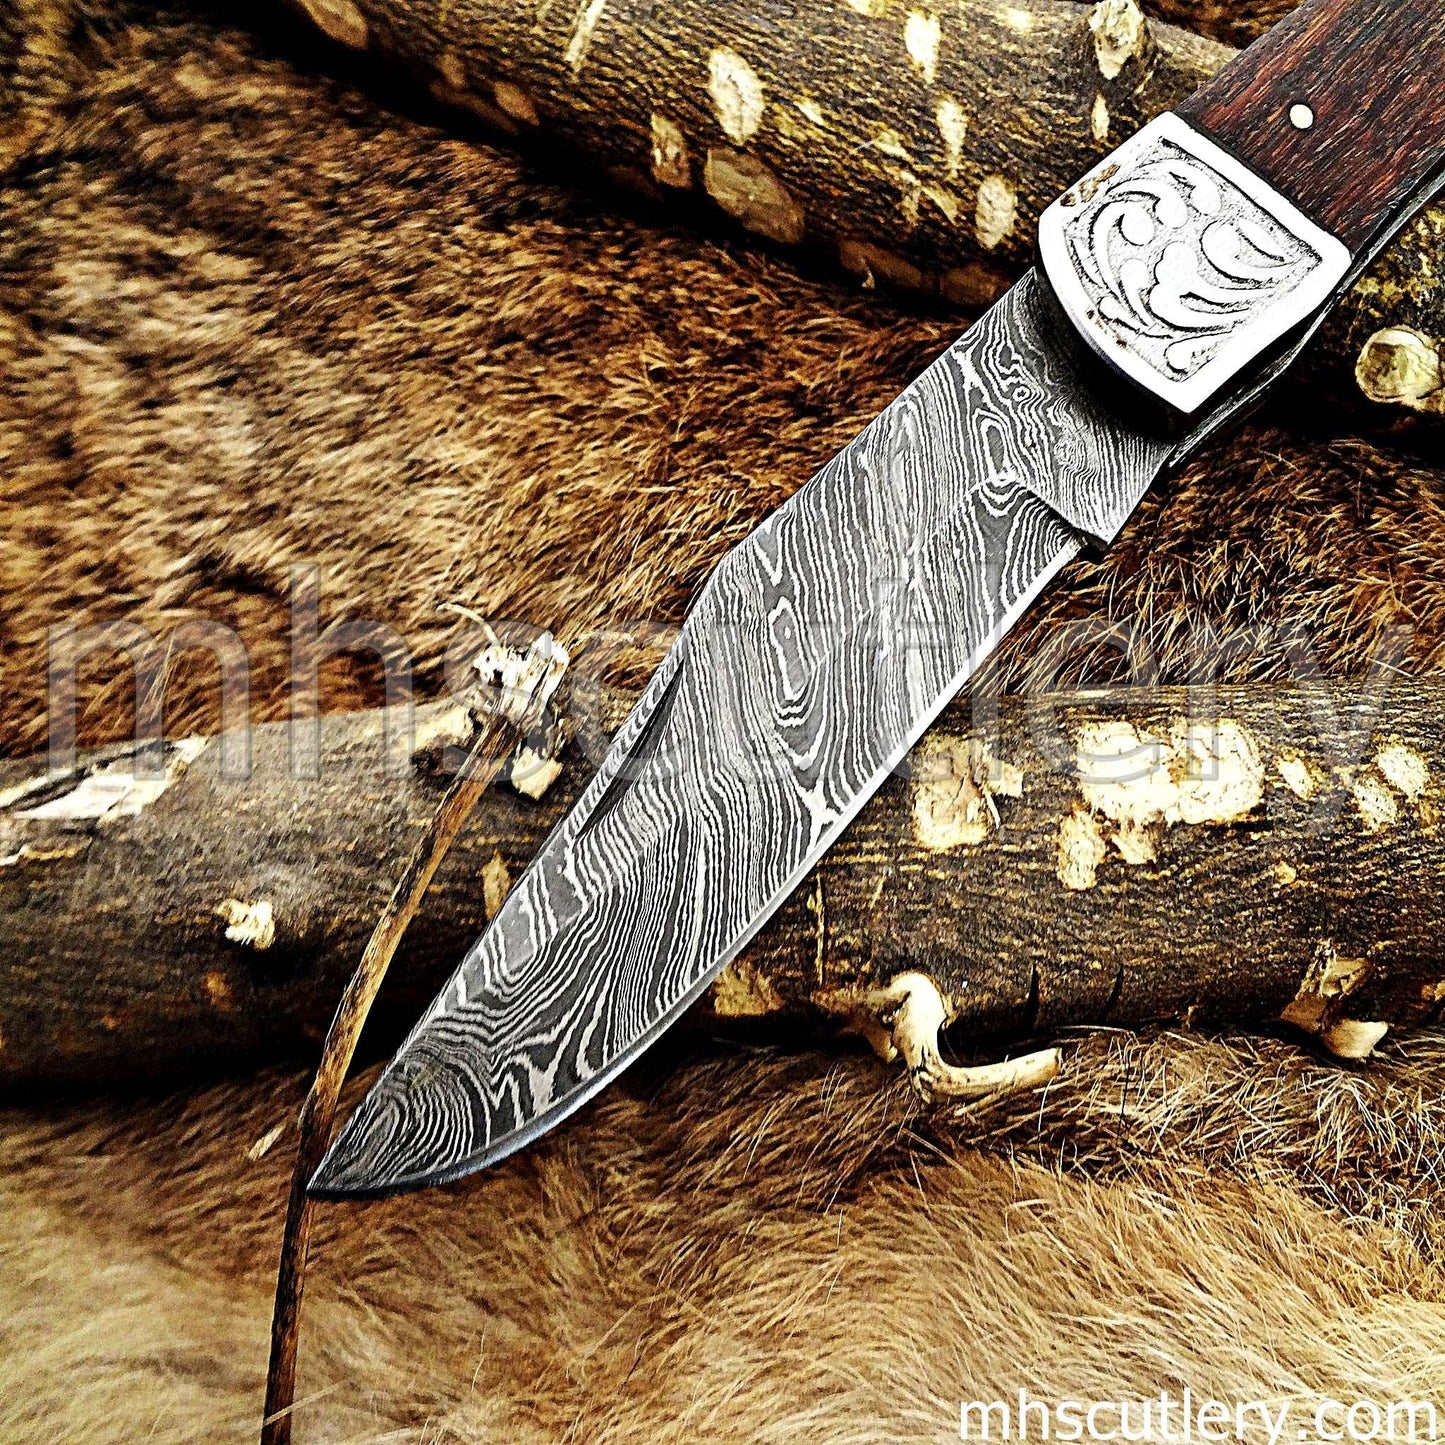 Custom Hand Forged Damascus Steel Classic Folding Pocket Knife | mhscutlery